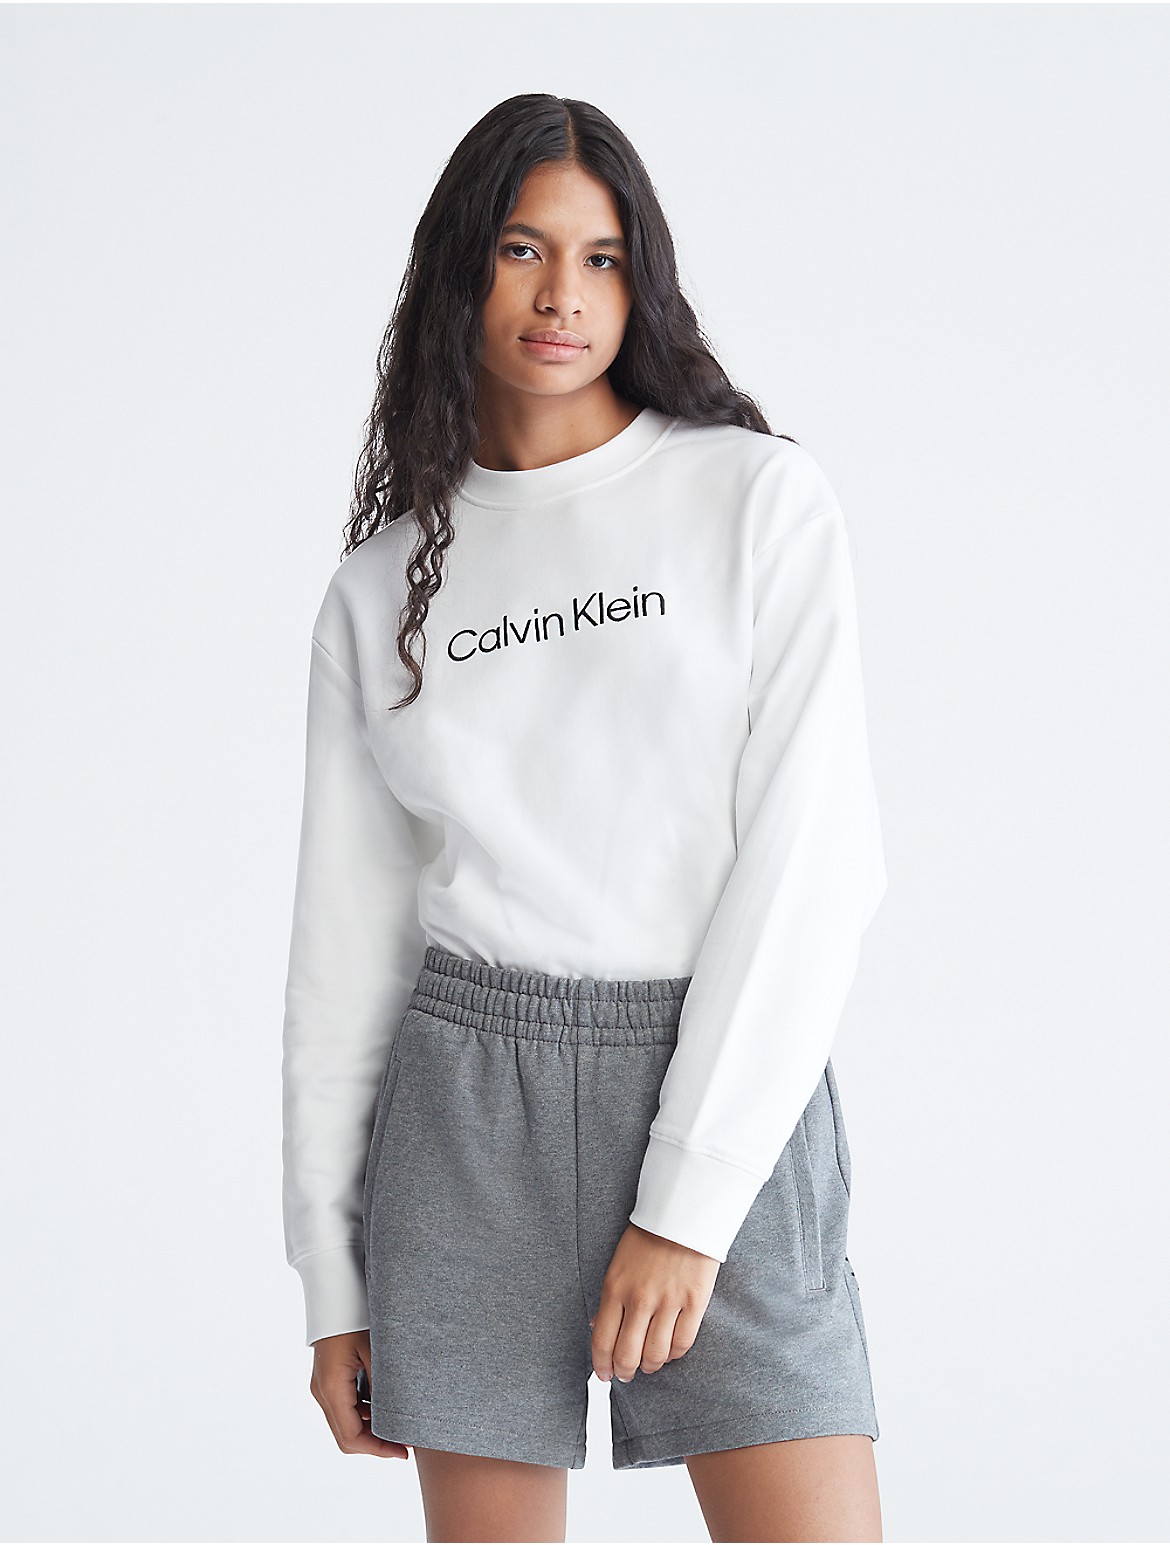 Calvin Klein Women's Relaxed Fit Standard Logo Crewneck Sweatshirt - White - XS